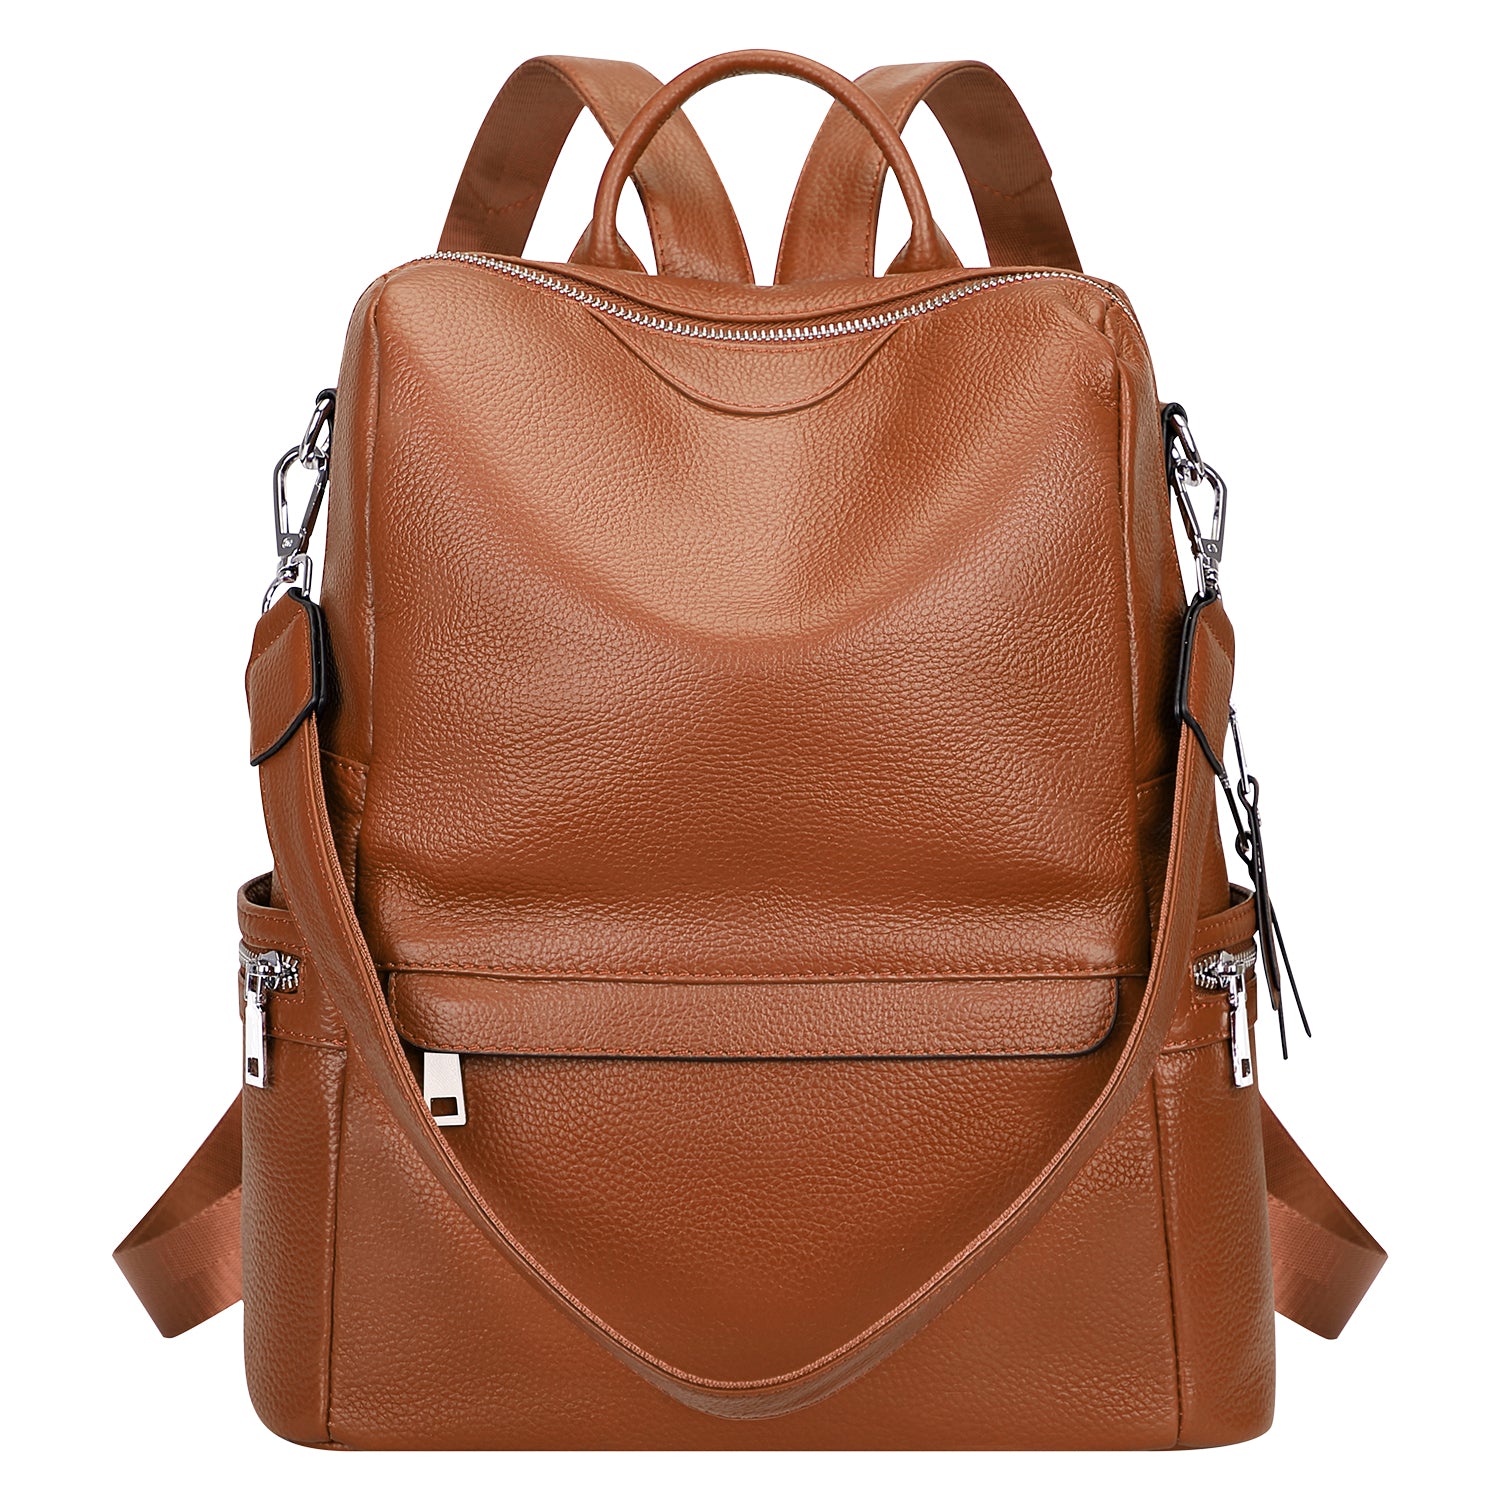 ALTOSY Leather Backpack for Women Elegant Genuine Backpack Purse